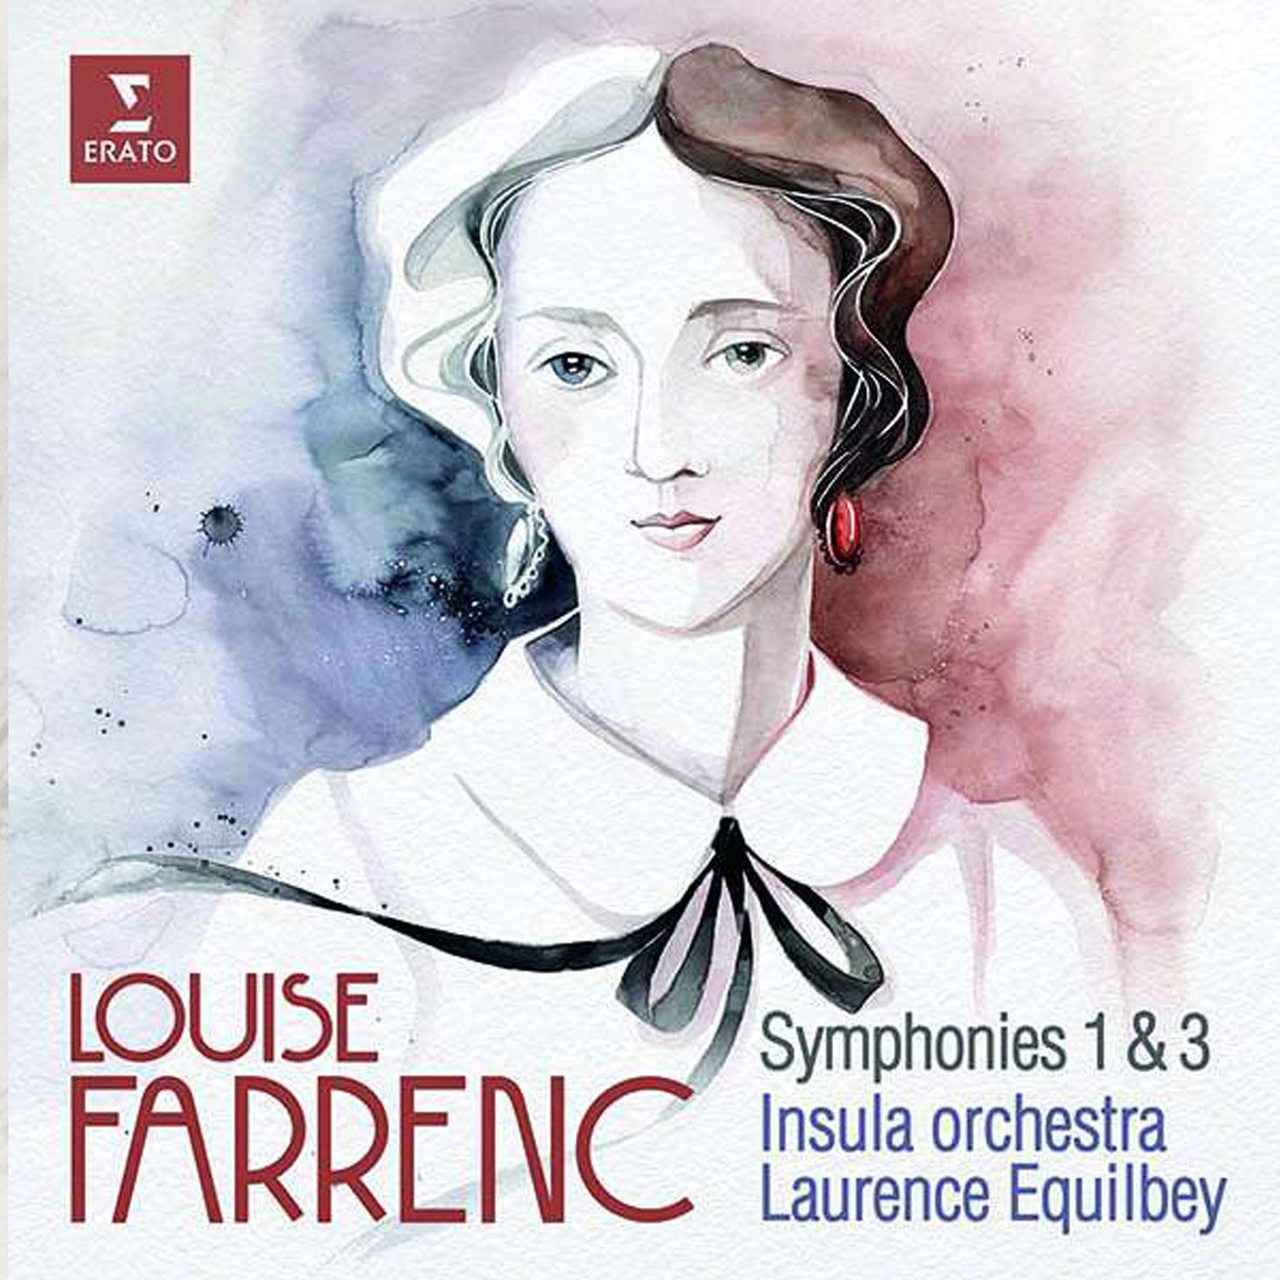 Albumcover von Louise Farrenc Symphonies 1&3